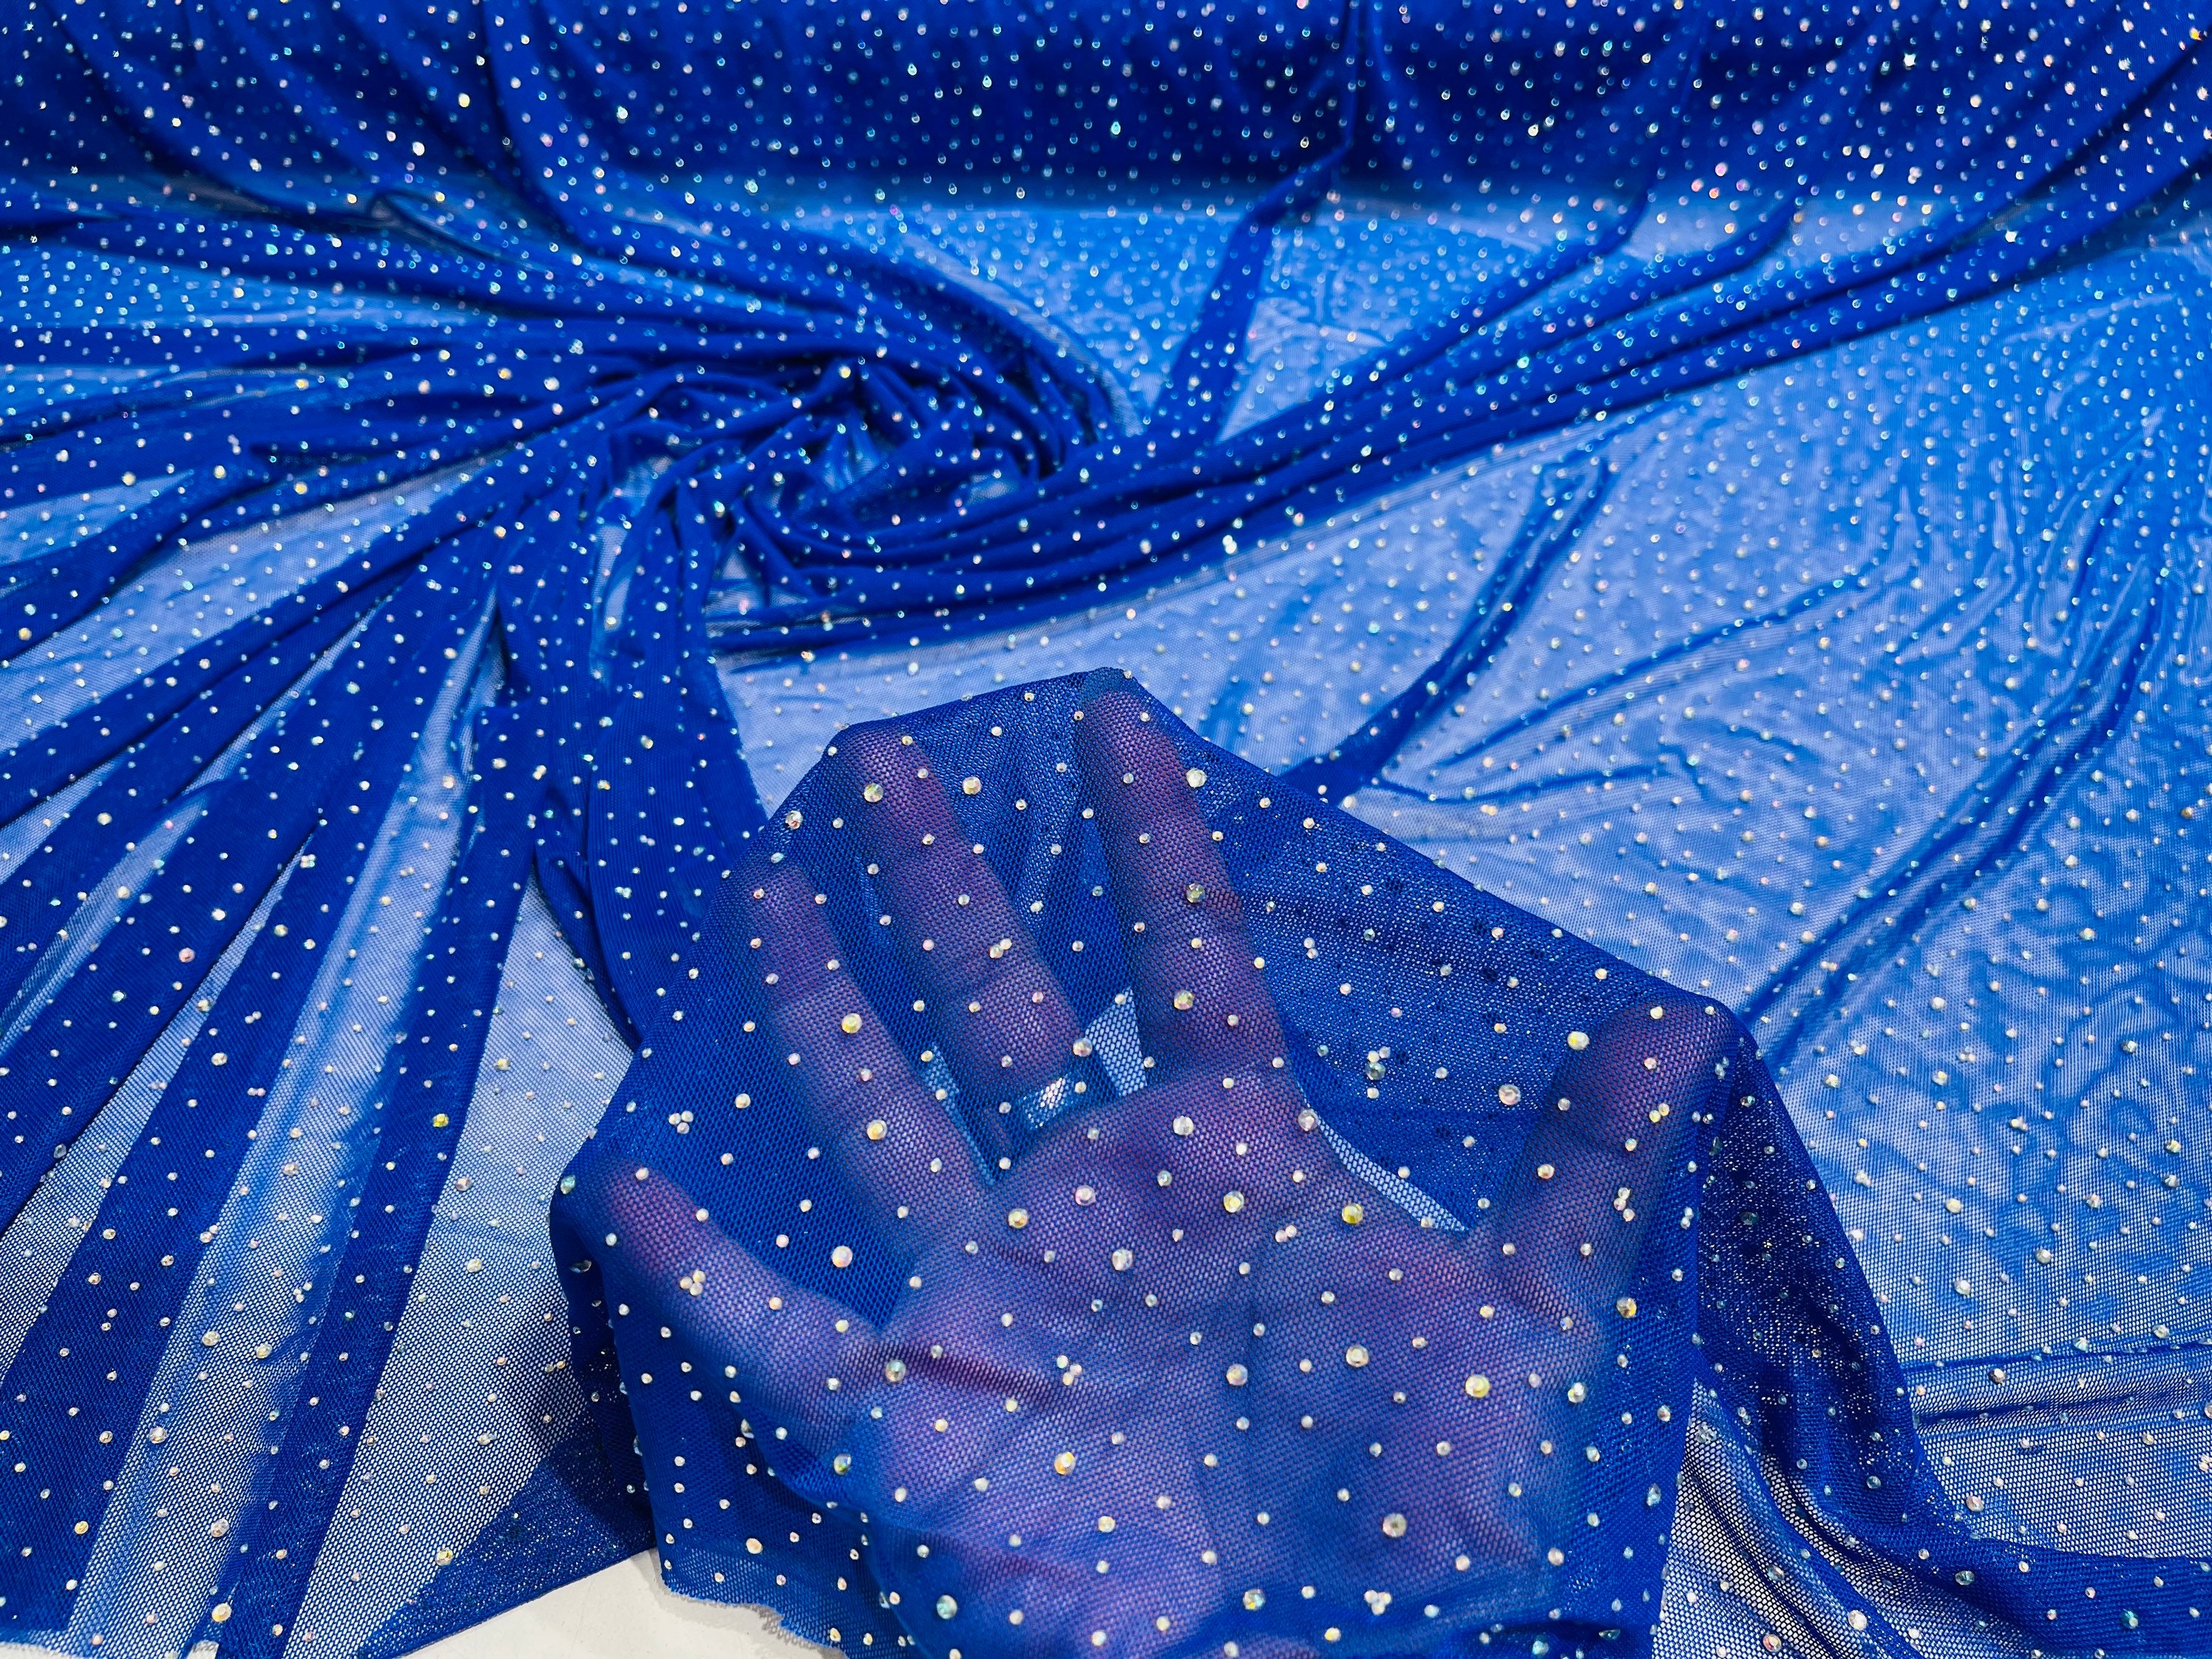 54 W Standard Royal Navy Blue Glitter Sparkle Stretch Tulle Fabric Price  per Yard 2-way Stretch 